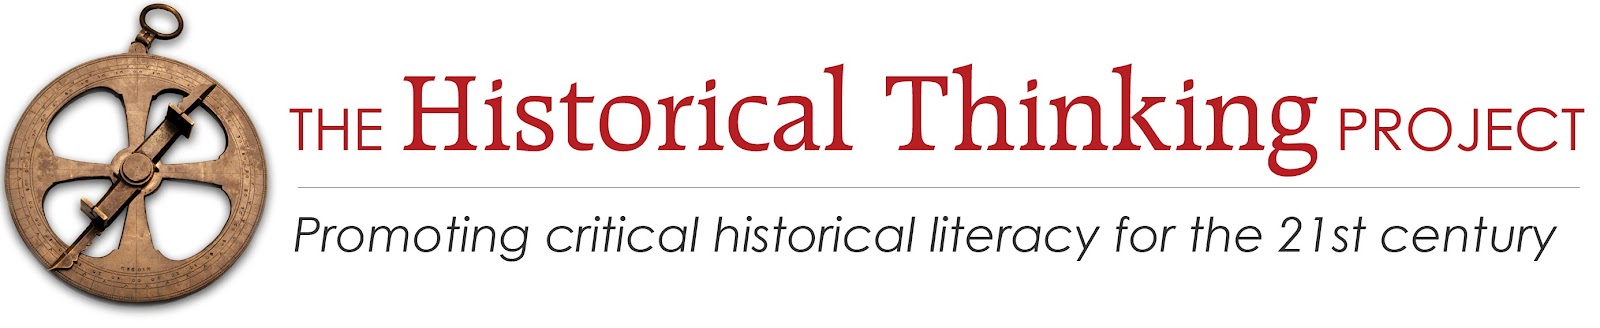 Historical_Thinking_Project_Logo.jpg